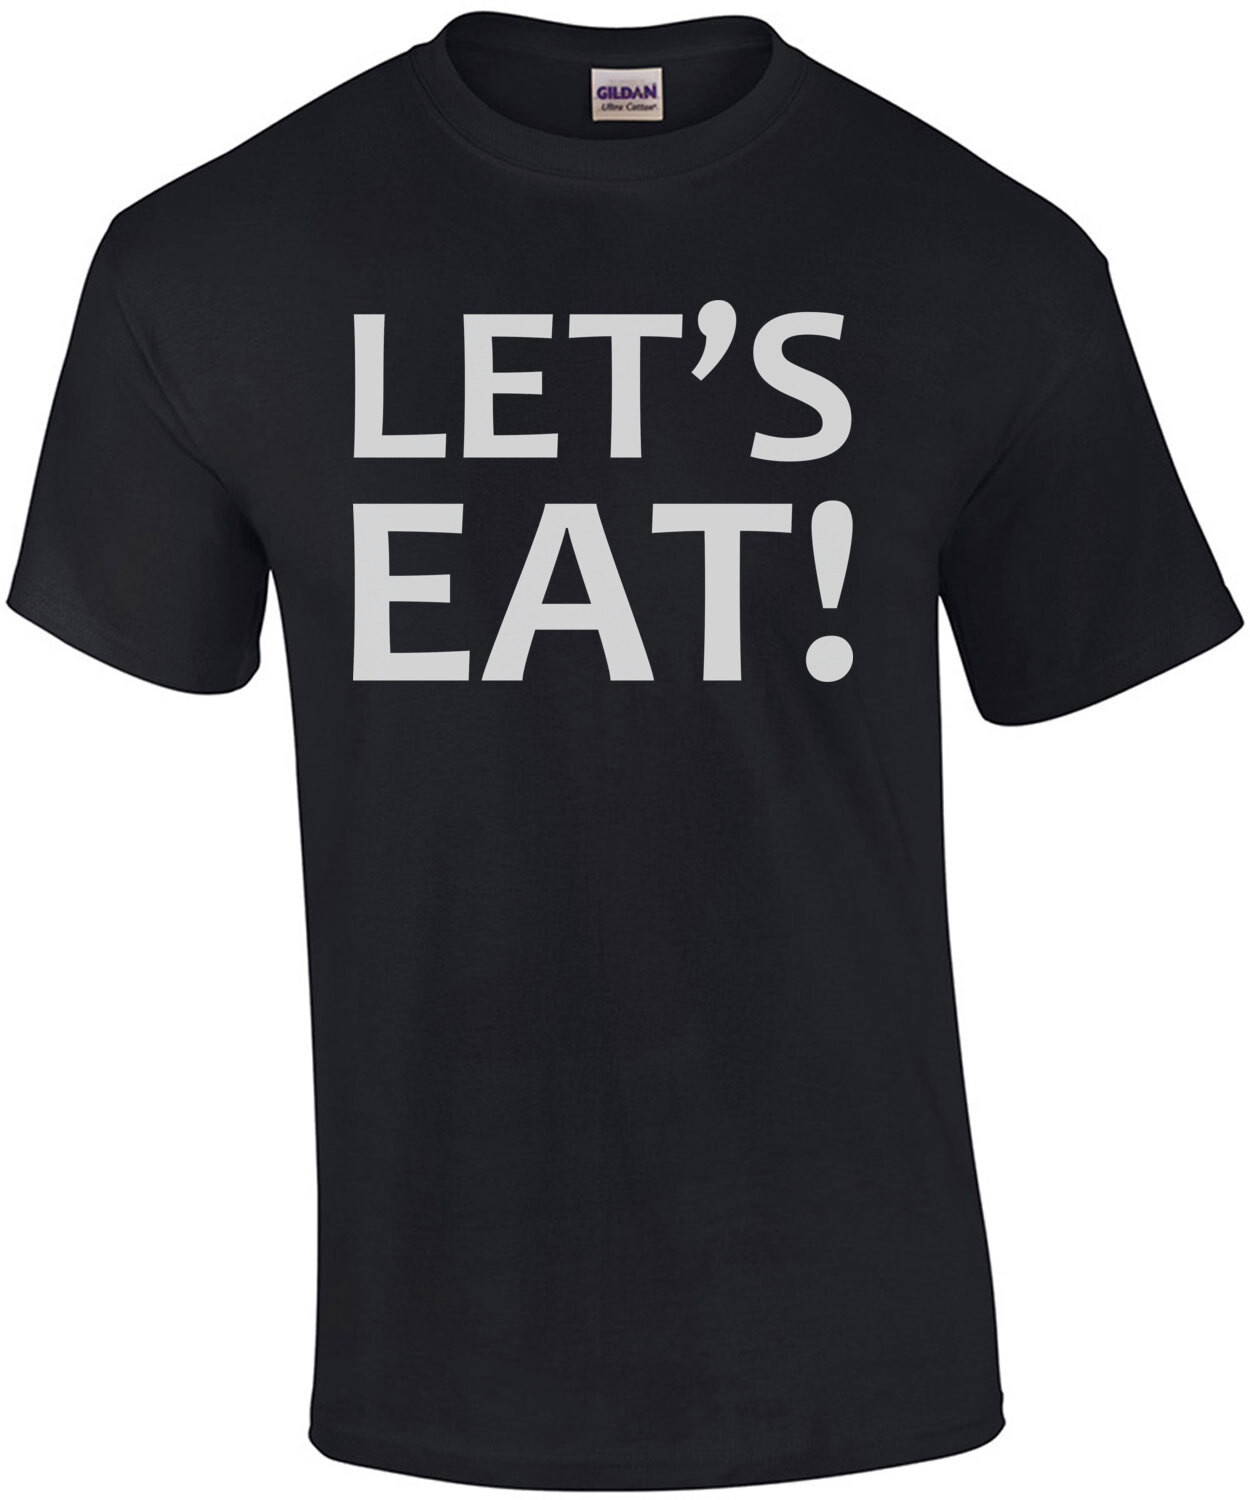 Let's Eat! - Funny eating fat guy t-shirt